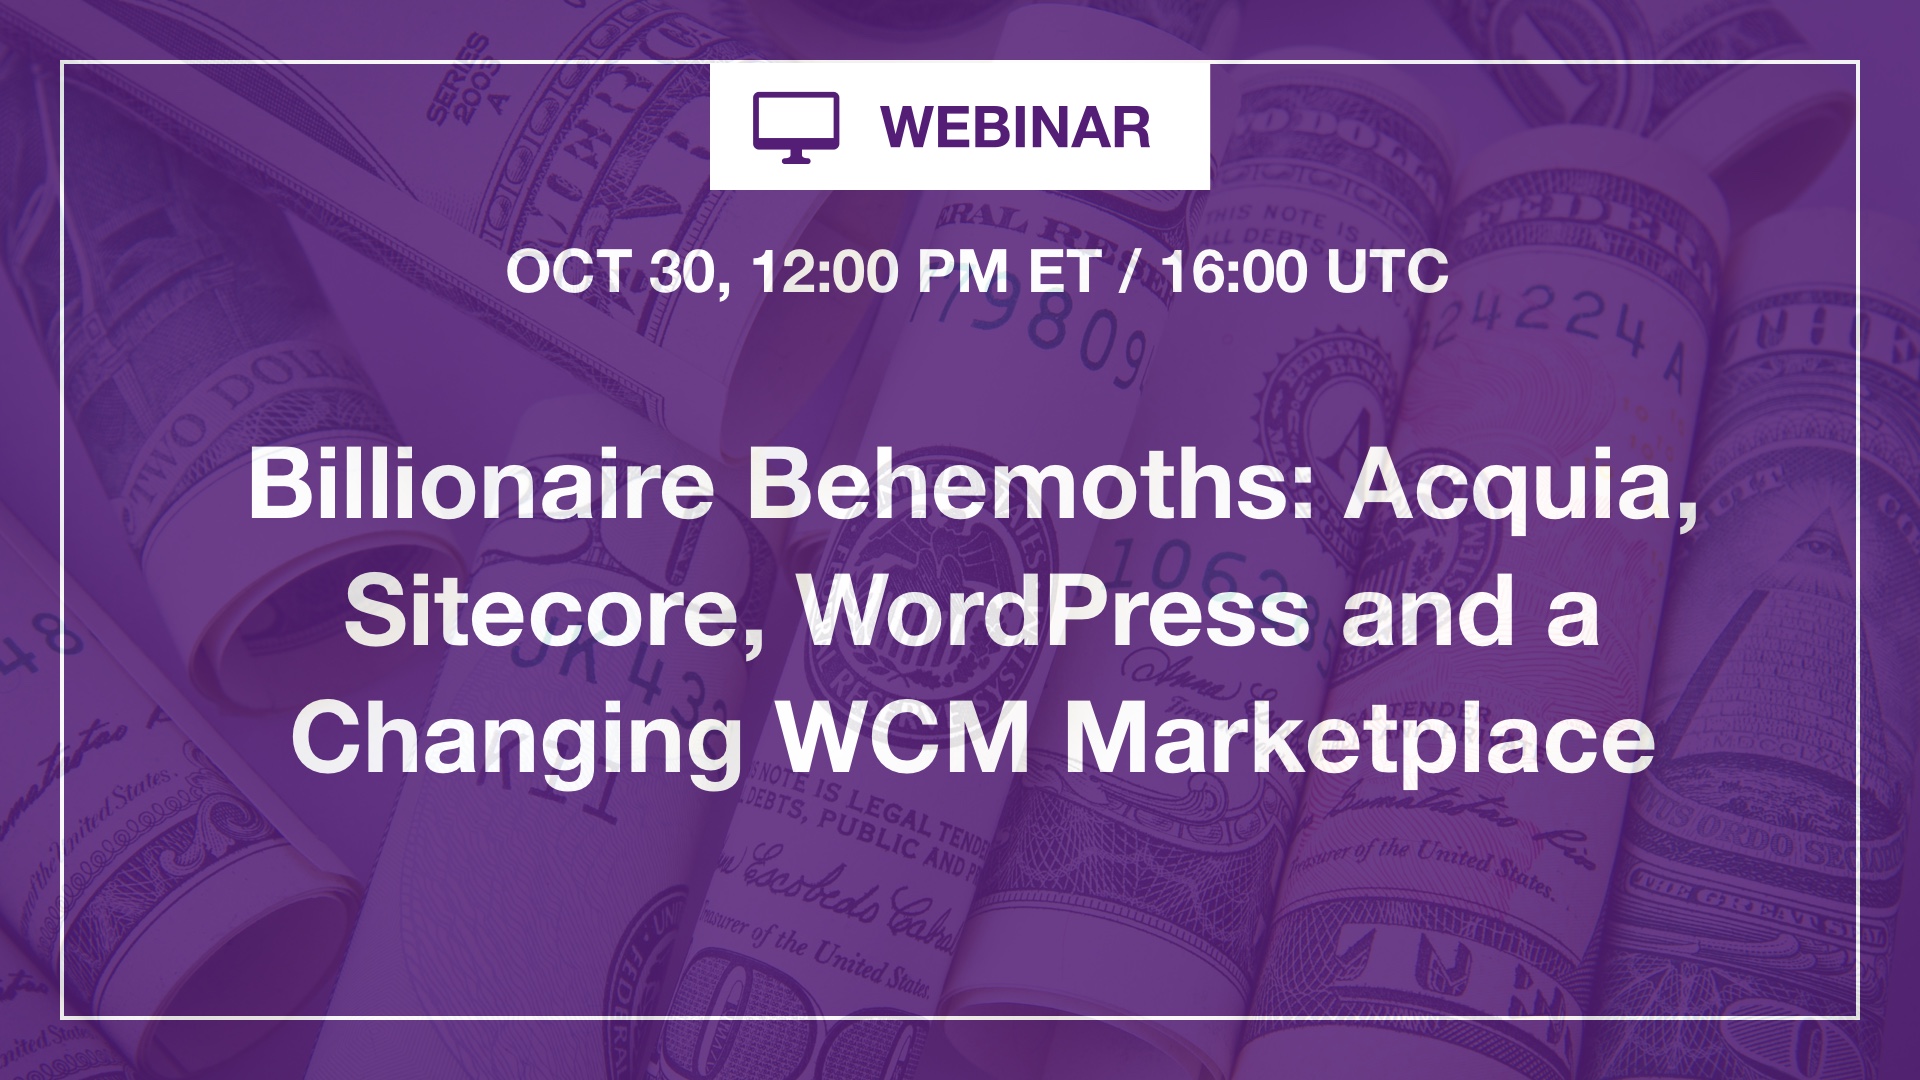 [Webinar] Billionaire Behemoths: Acquia, Sitecore, WordPress and a Changing WCM Marketplace